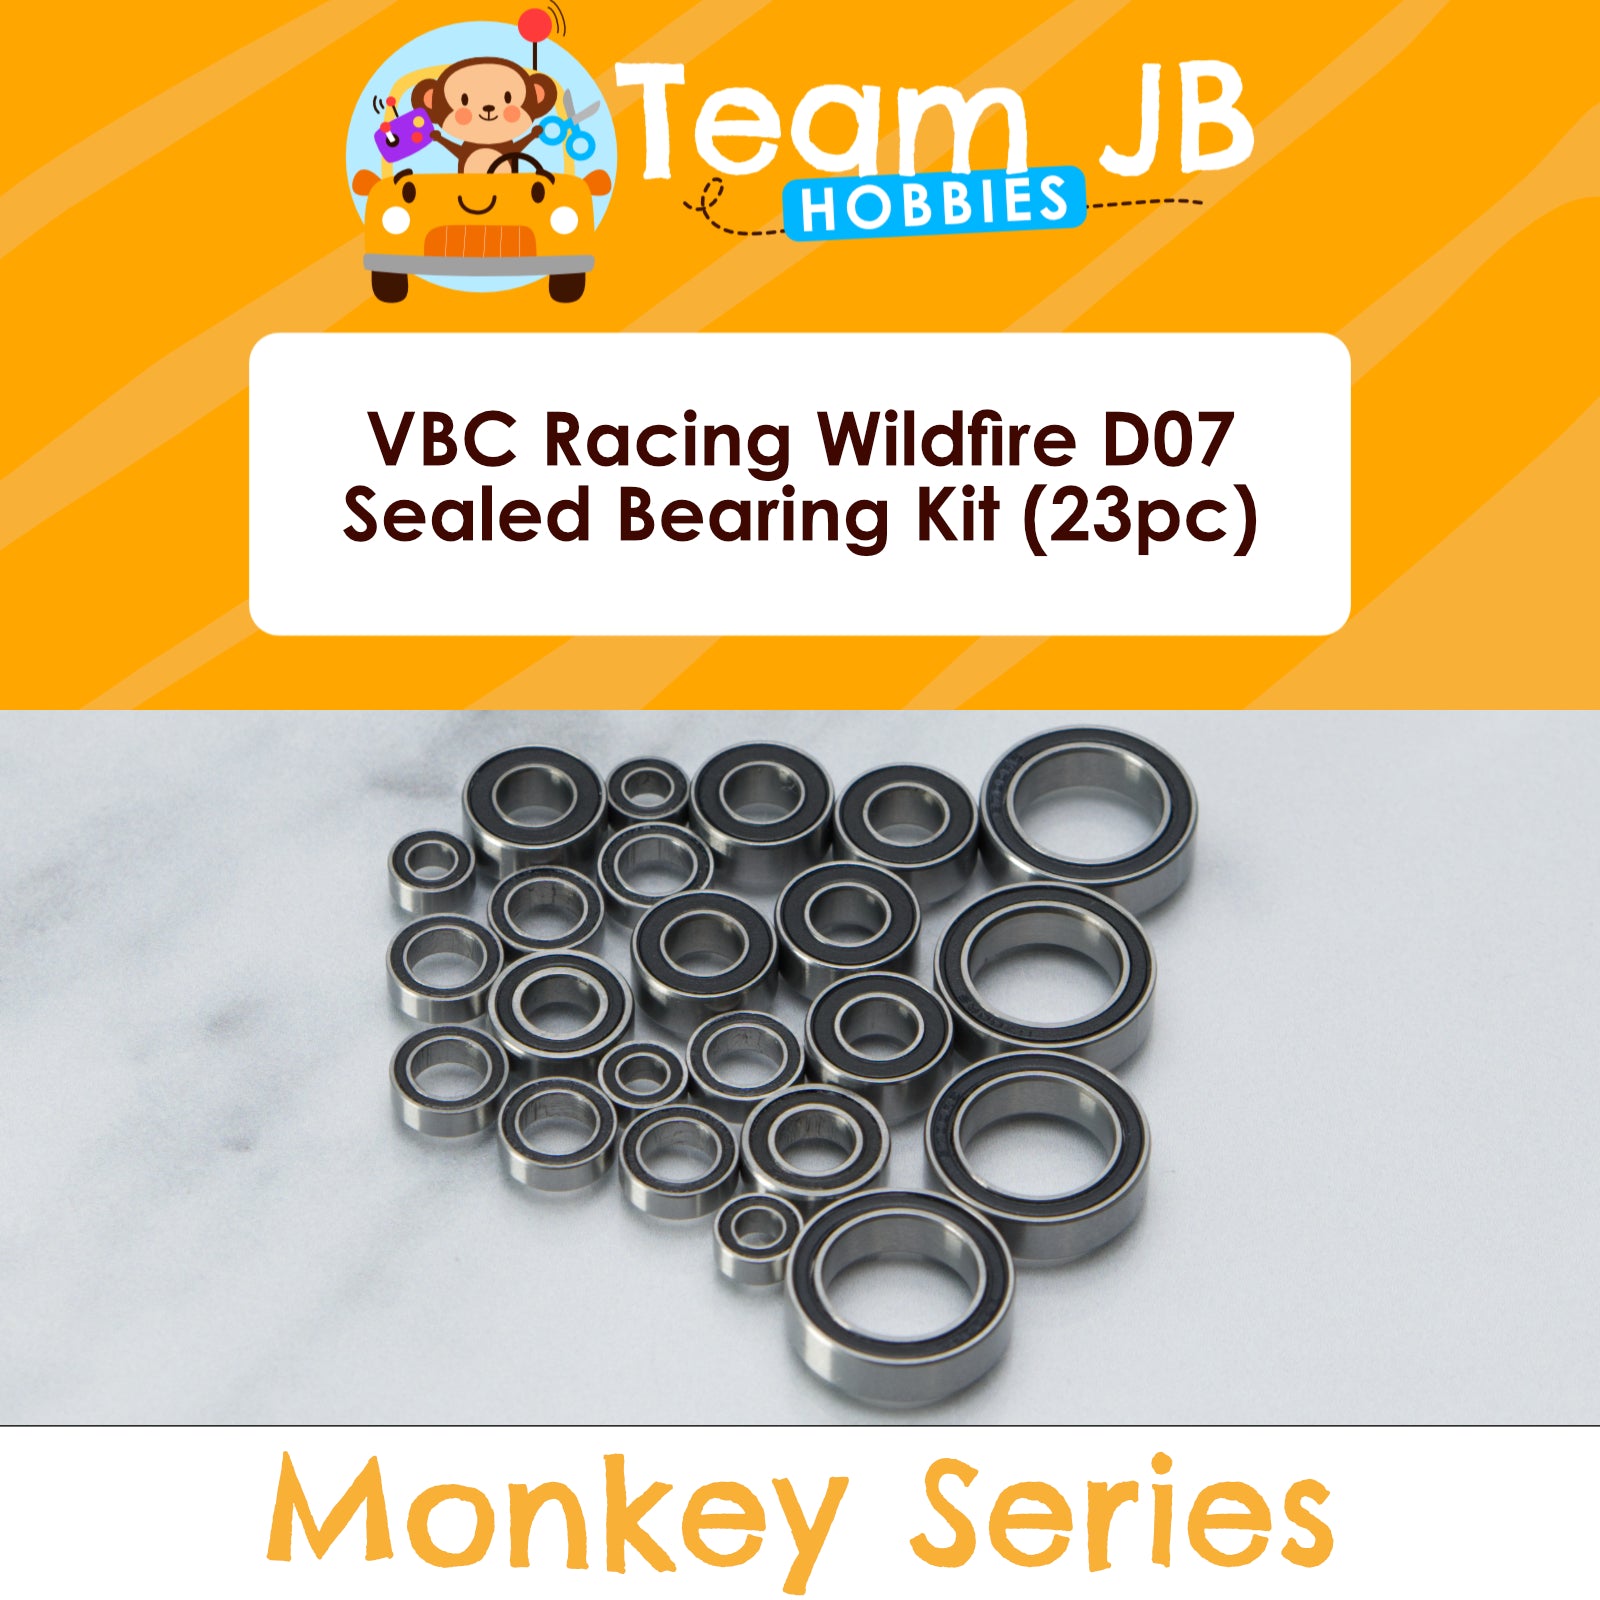 VBC Racing Wildfire D07 - Sealed Bearing Kit